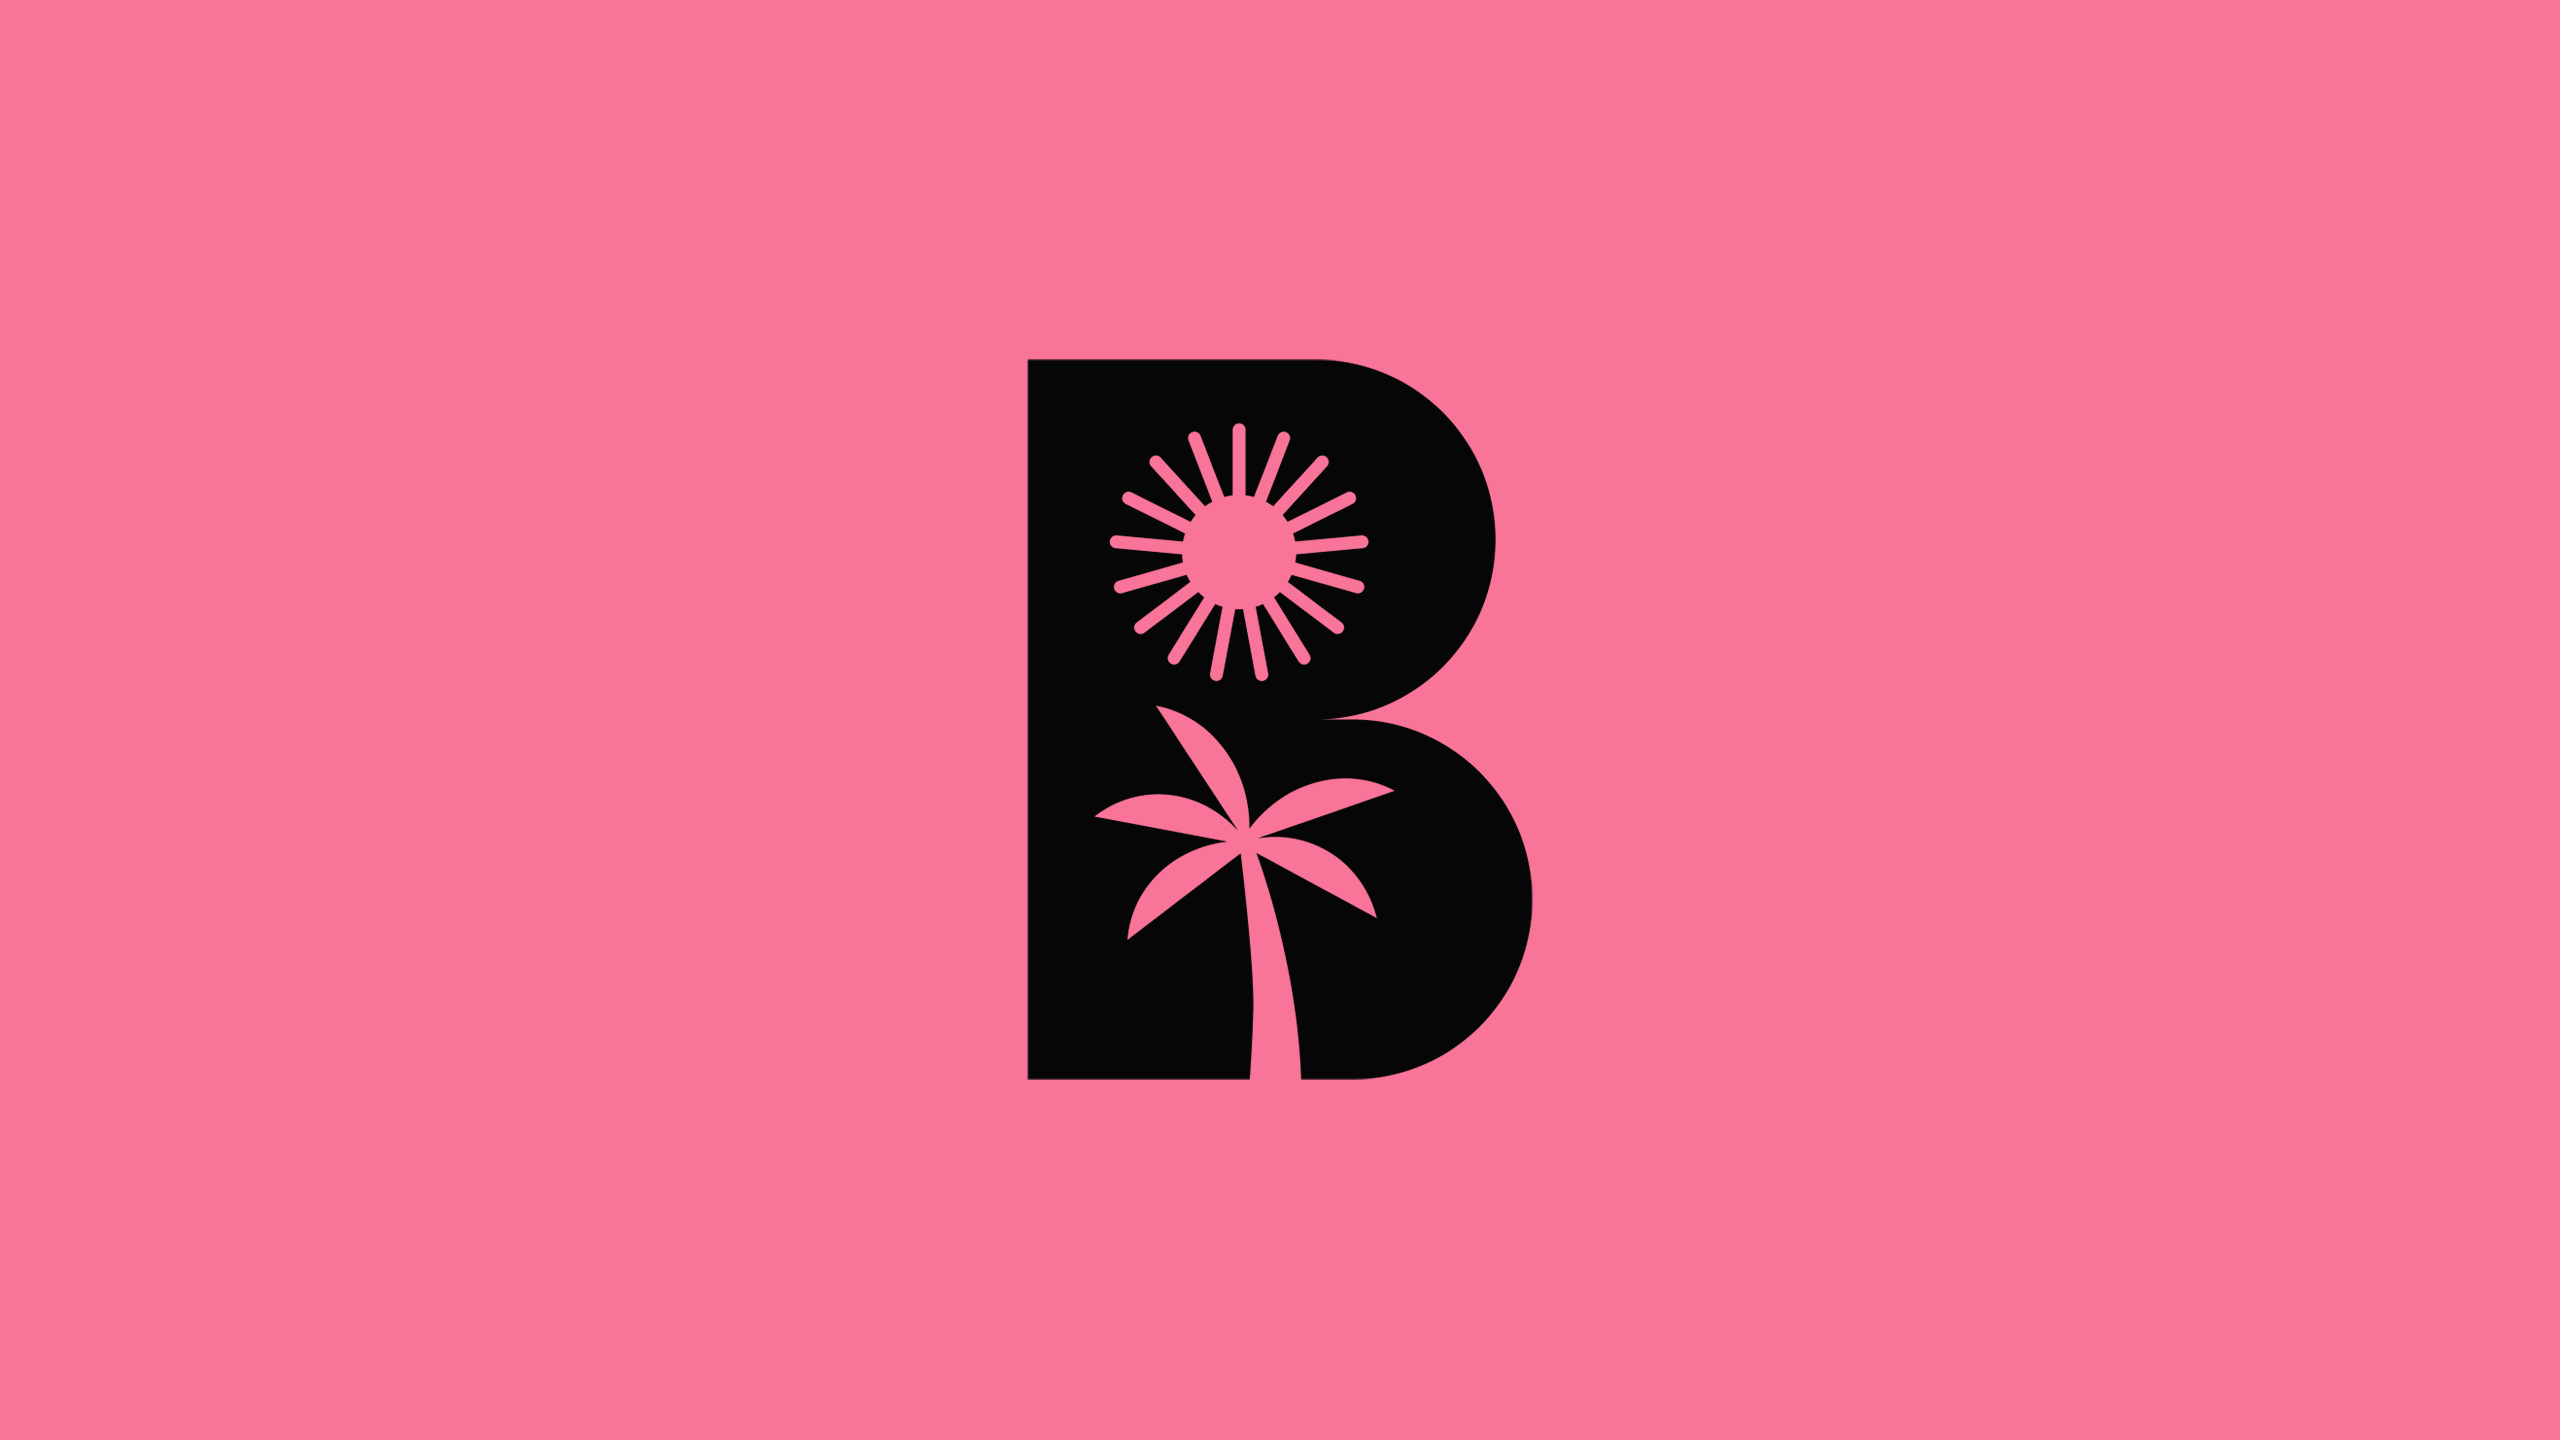 Black and pink logo designed for swimwear brand Blackbough